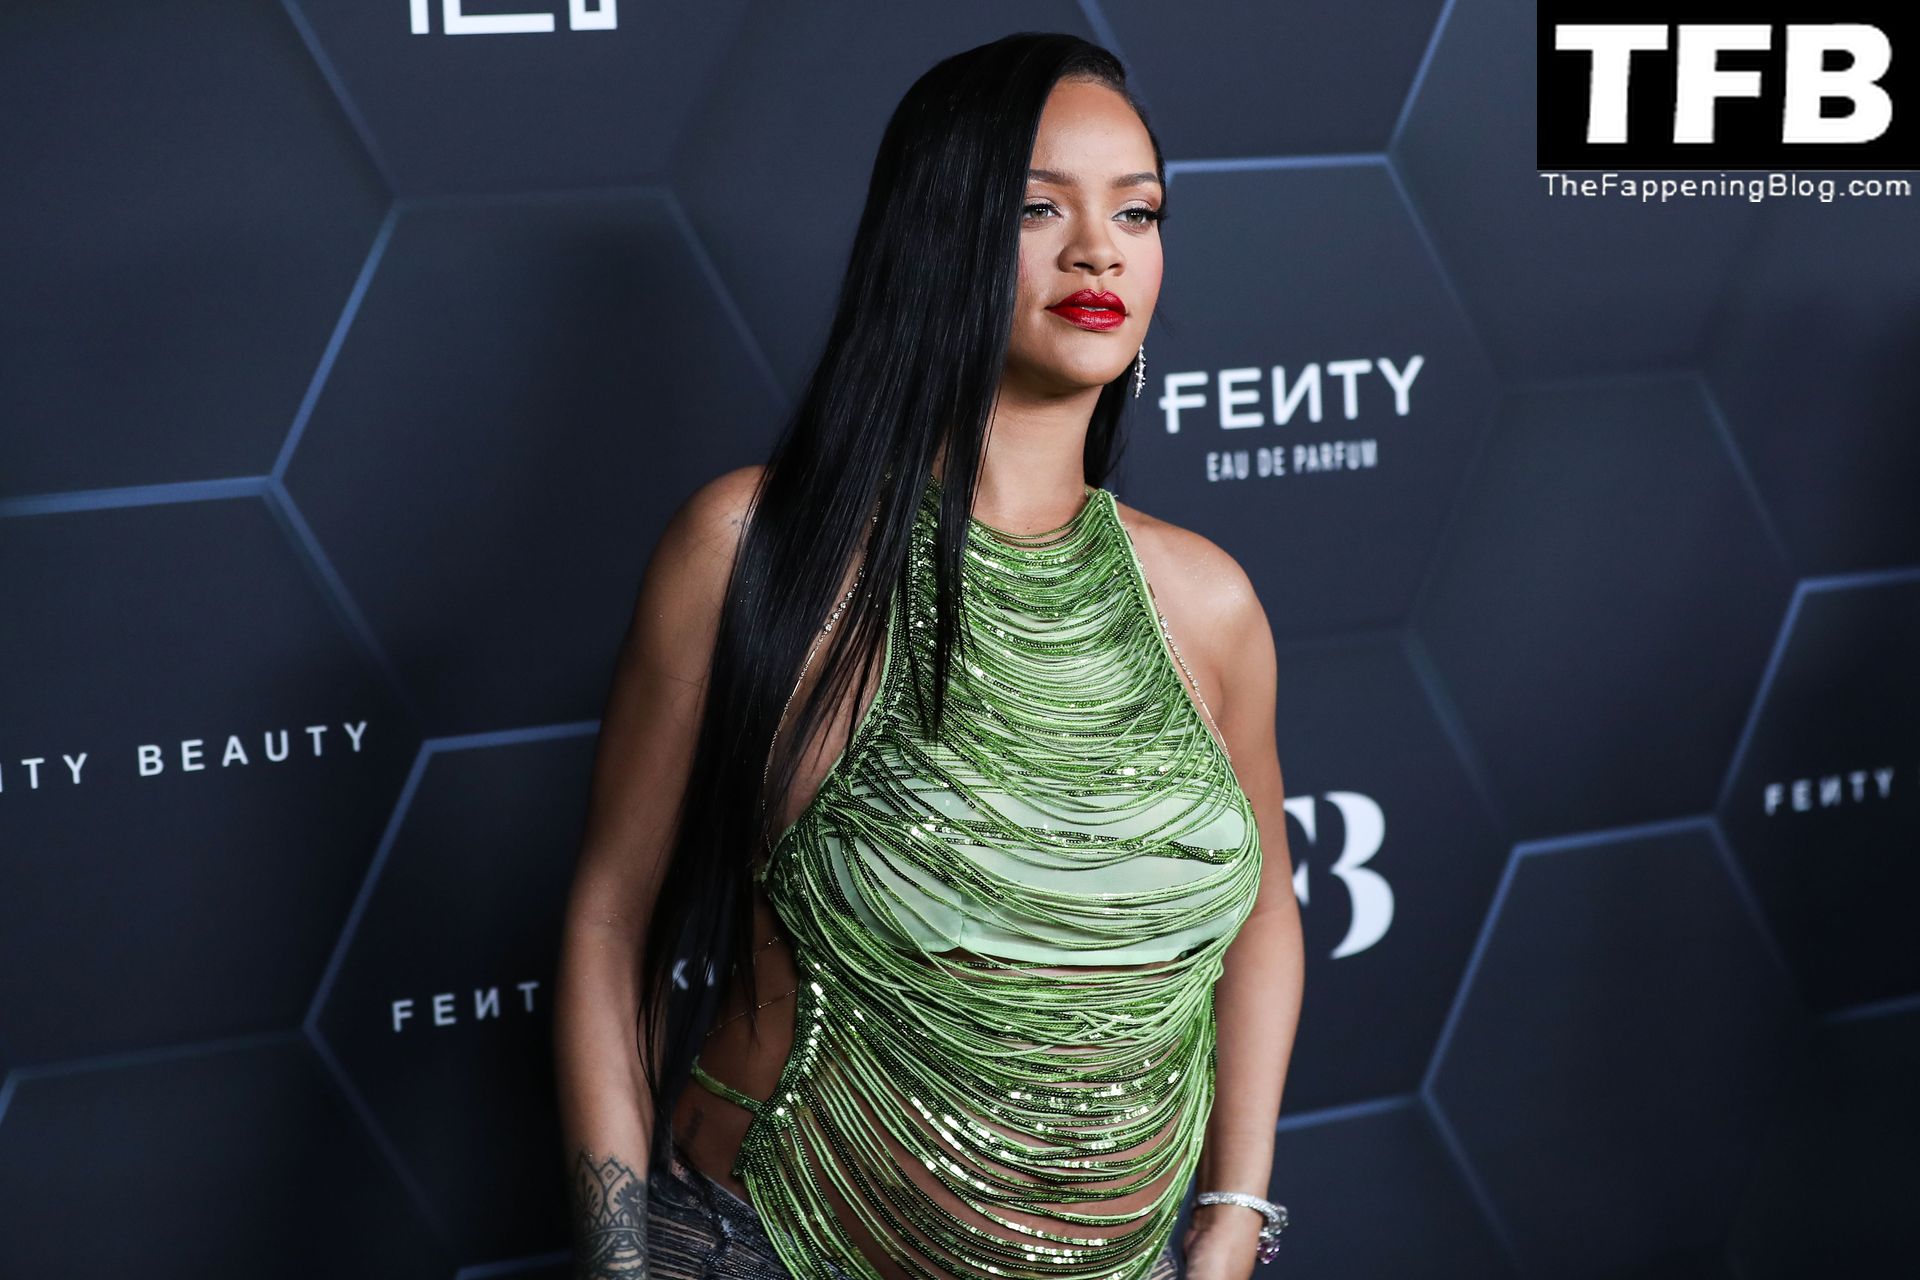 Rihanna-Sexy-The-Fappening-Blog-76.jpg